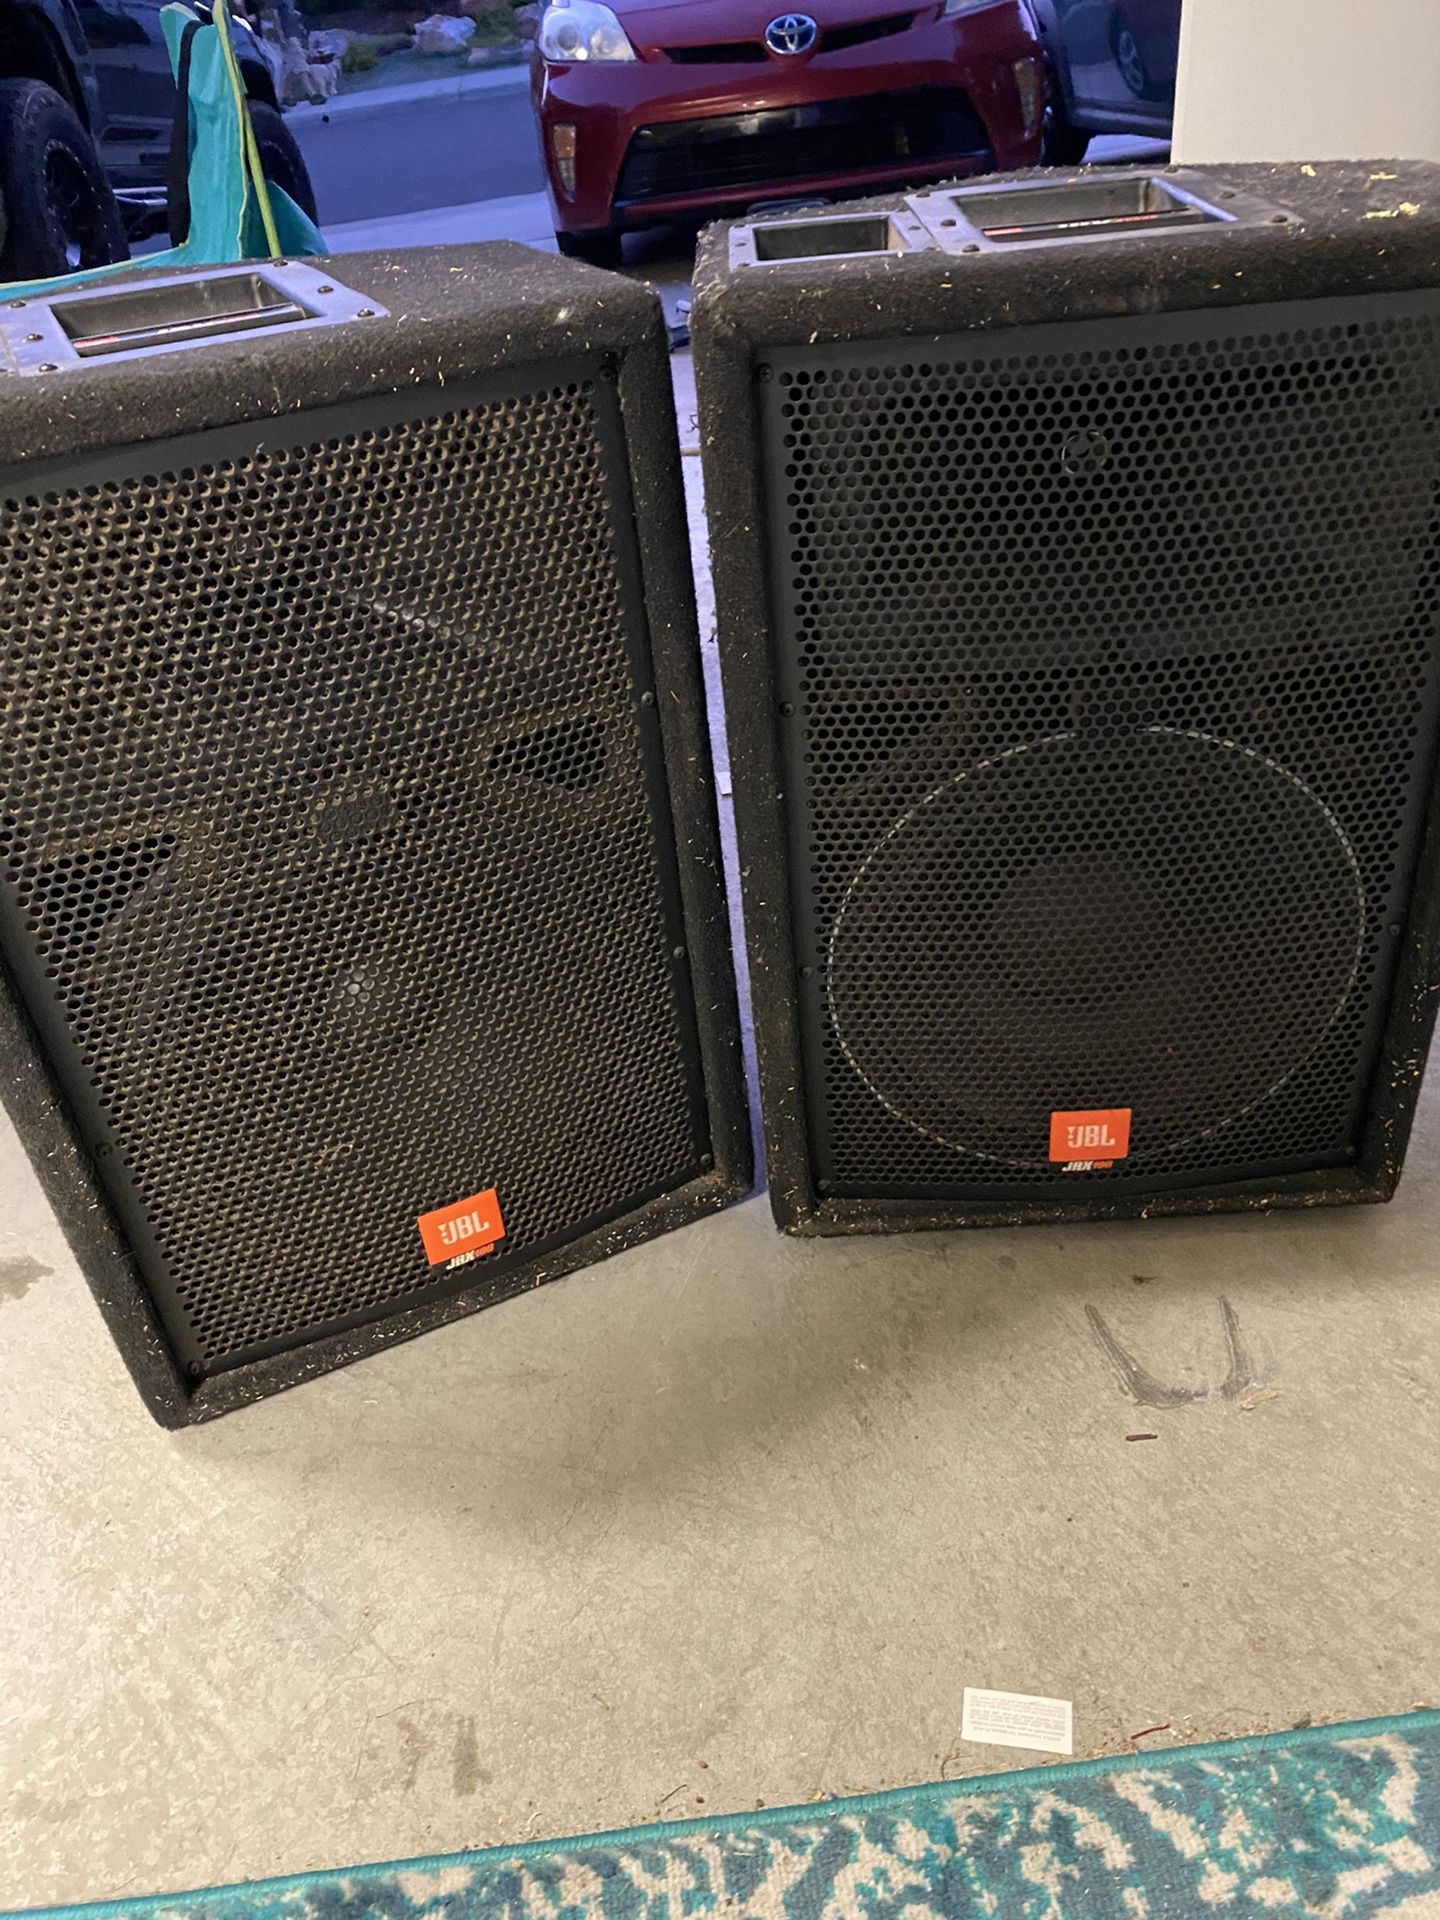 2 JBL JRX 100 speakers